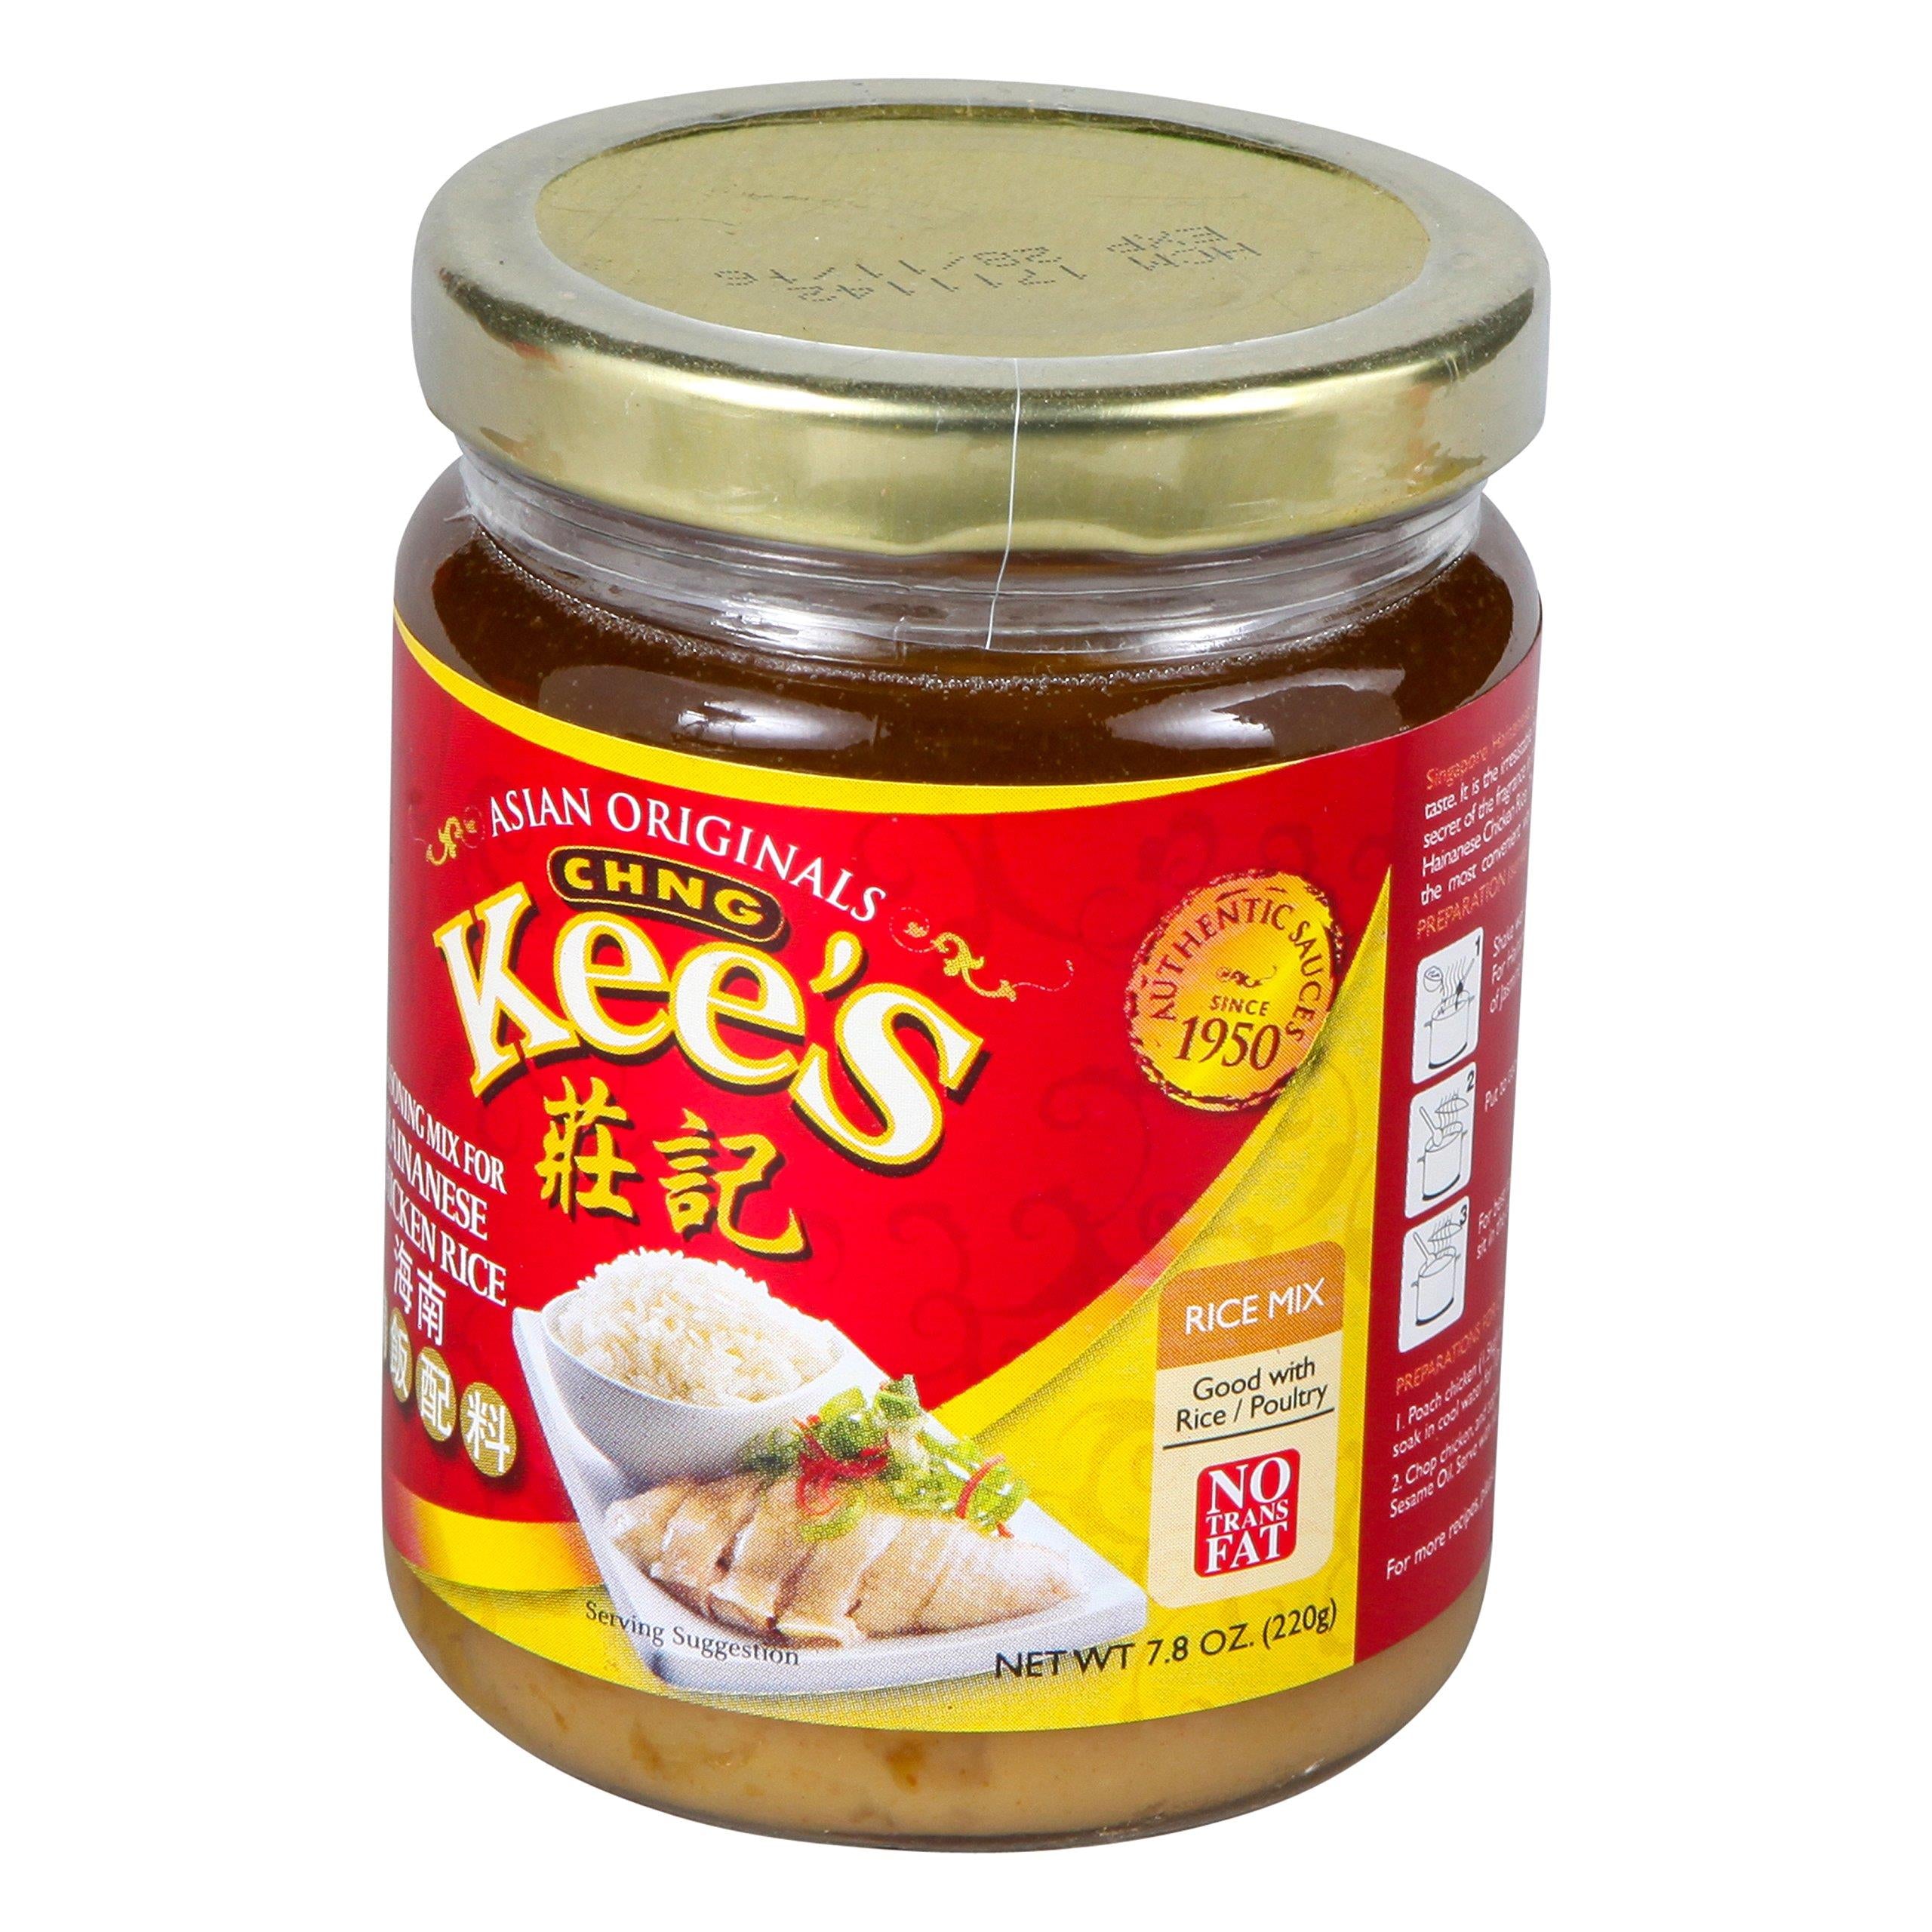 Kee's, Hainanese Chicken Rice Mix, 7.8 oz